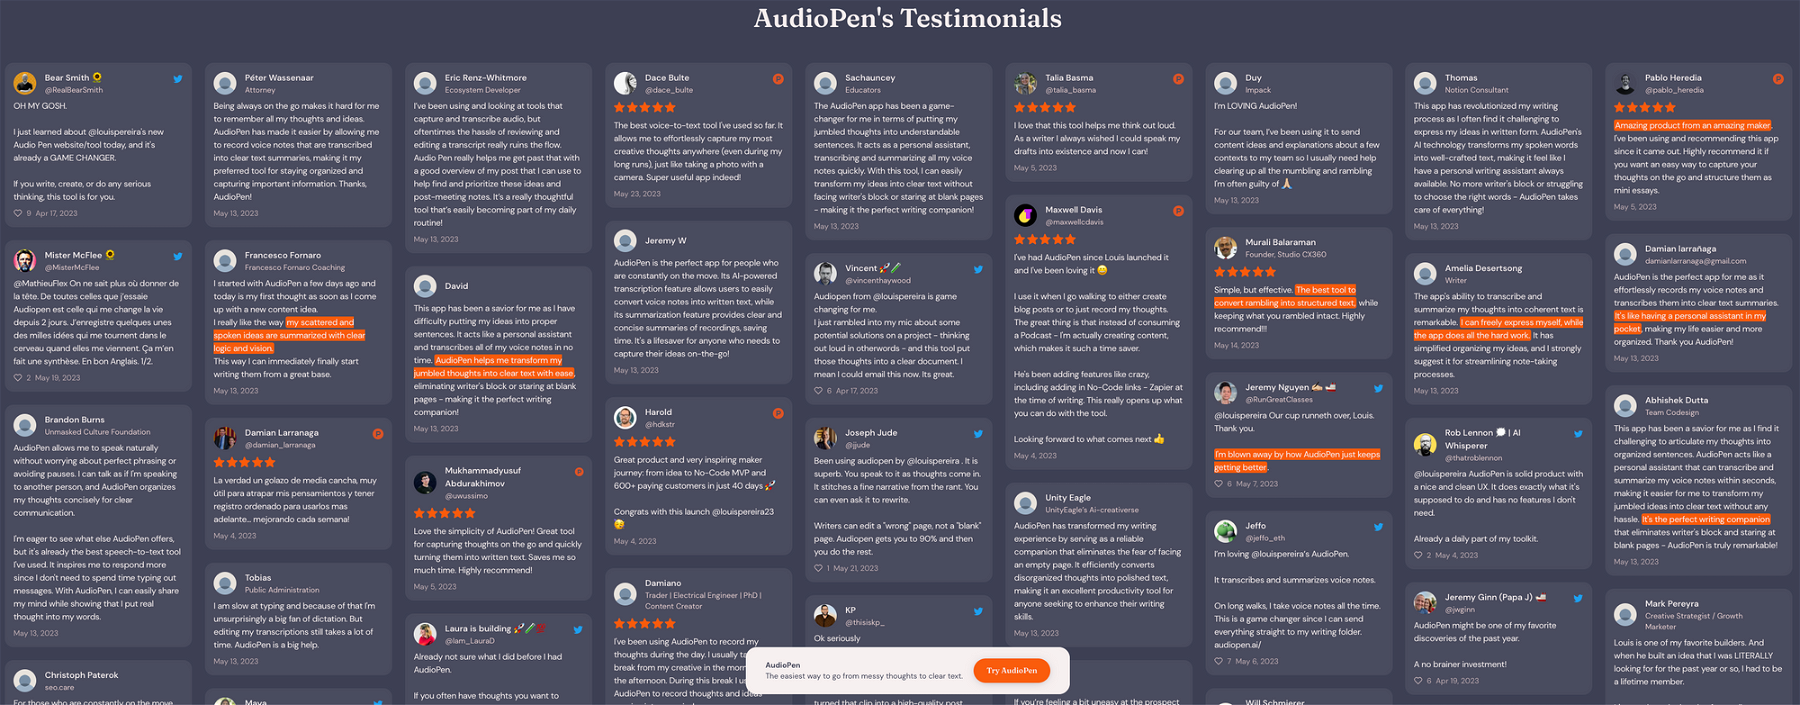 AudioPen's gigantic wall of testimonials